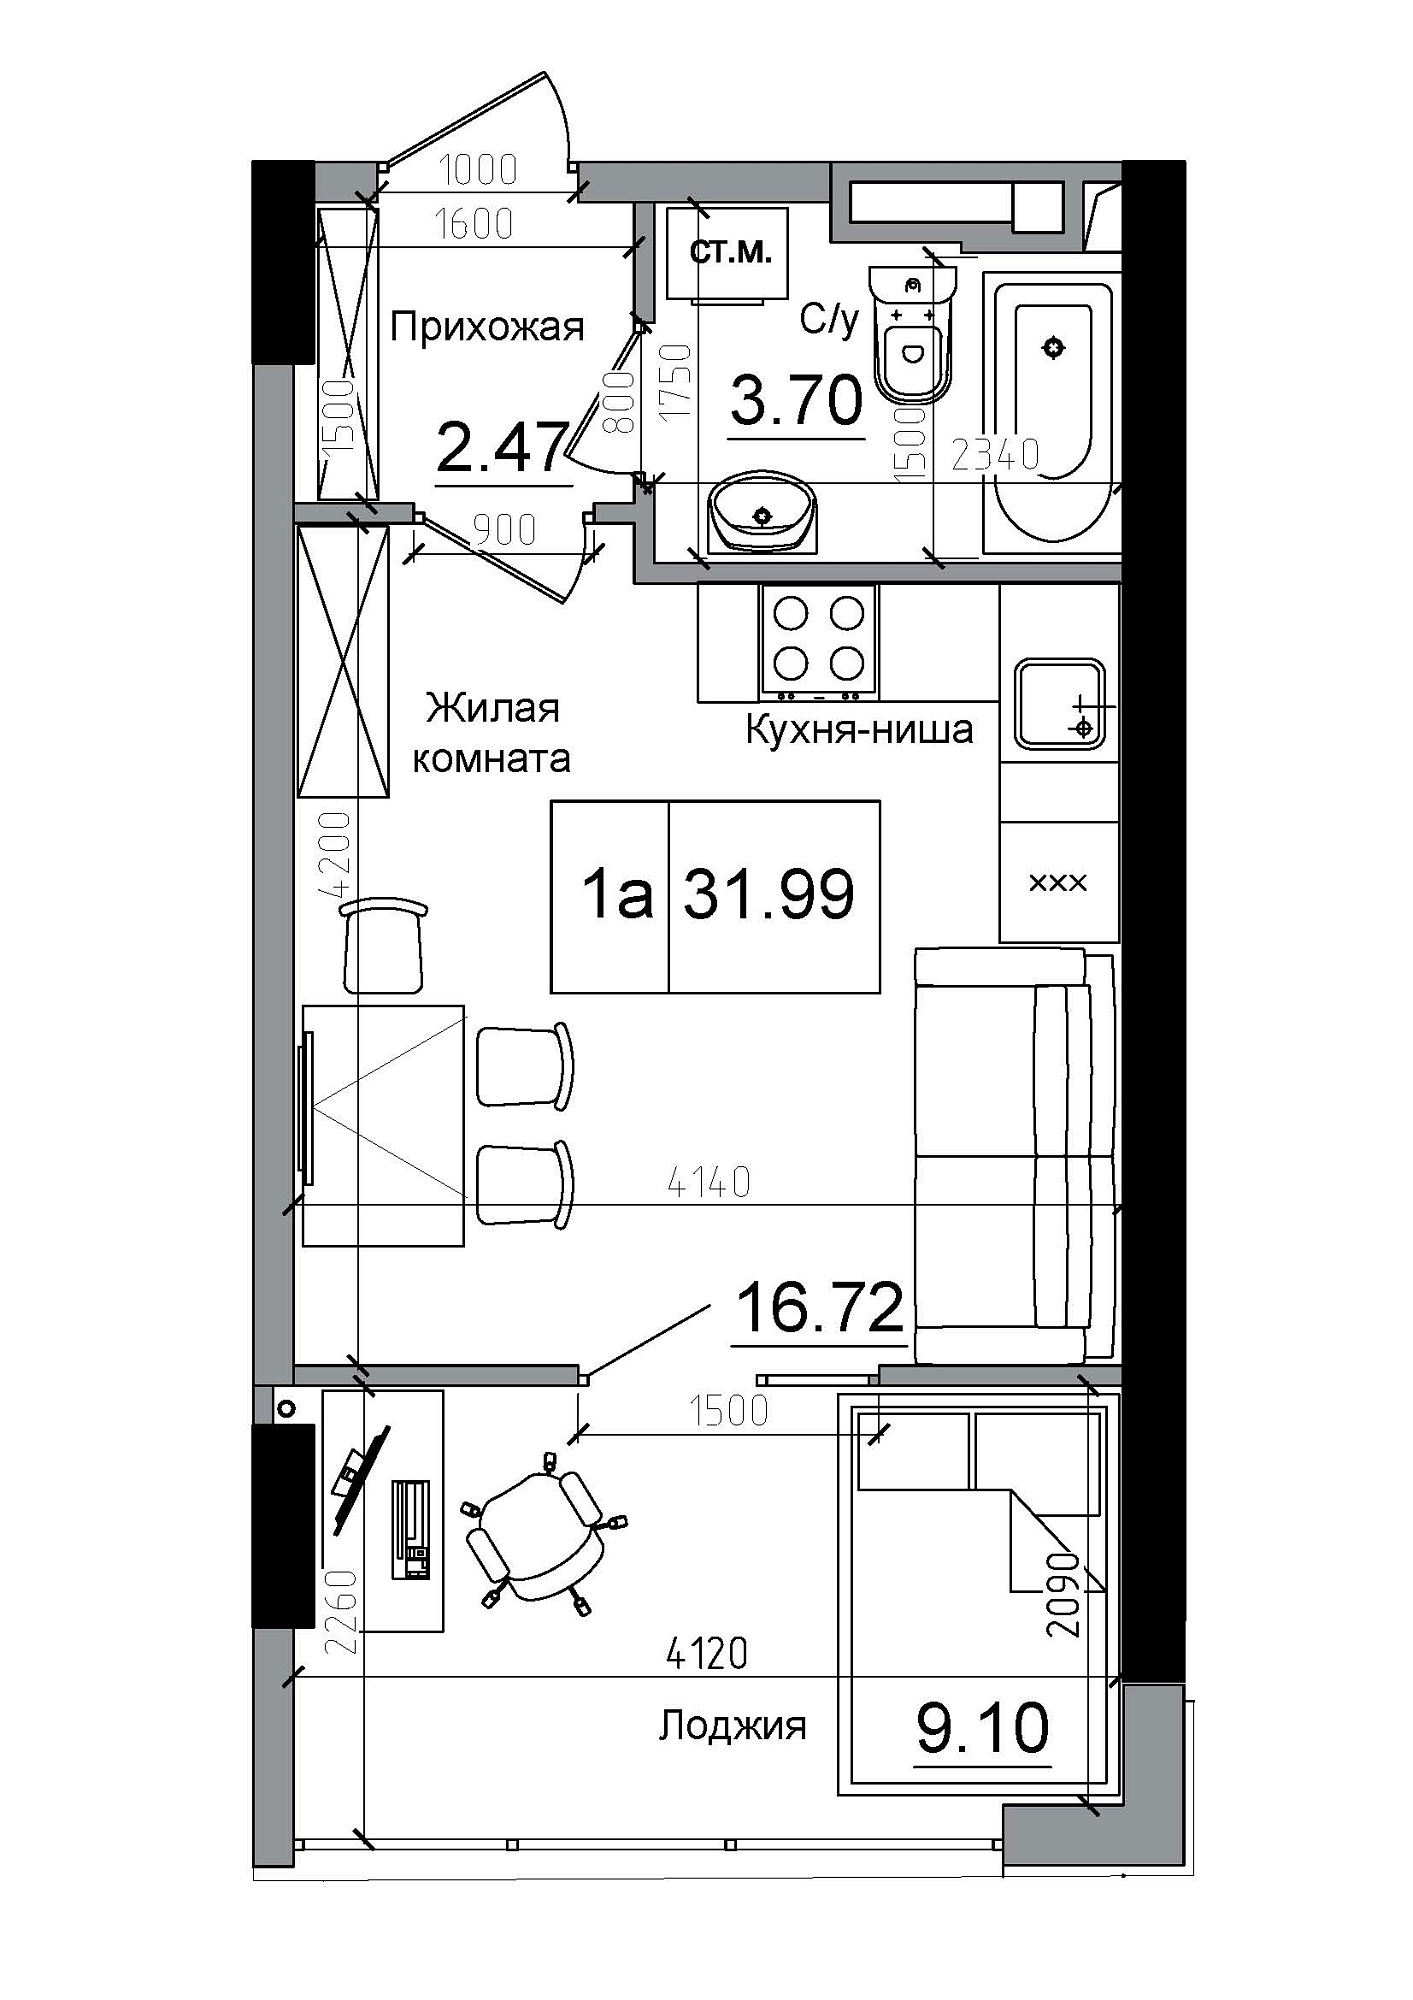 Planning Smart flats area 31.99m2, AB-12-05/00001.